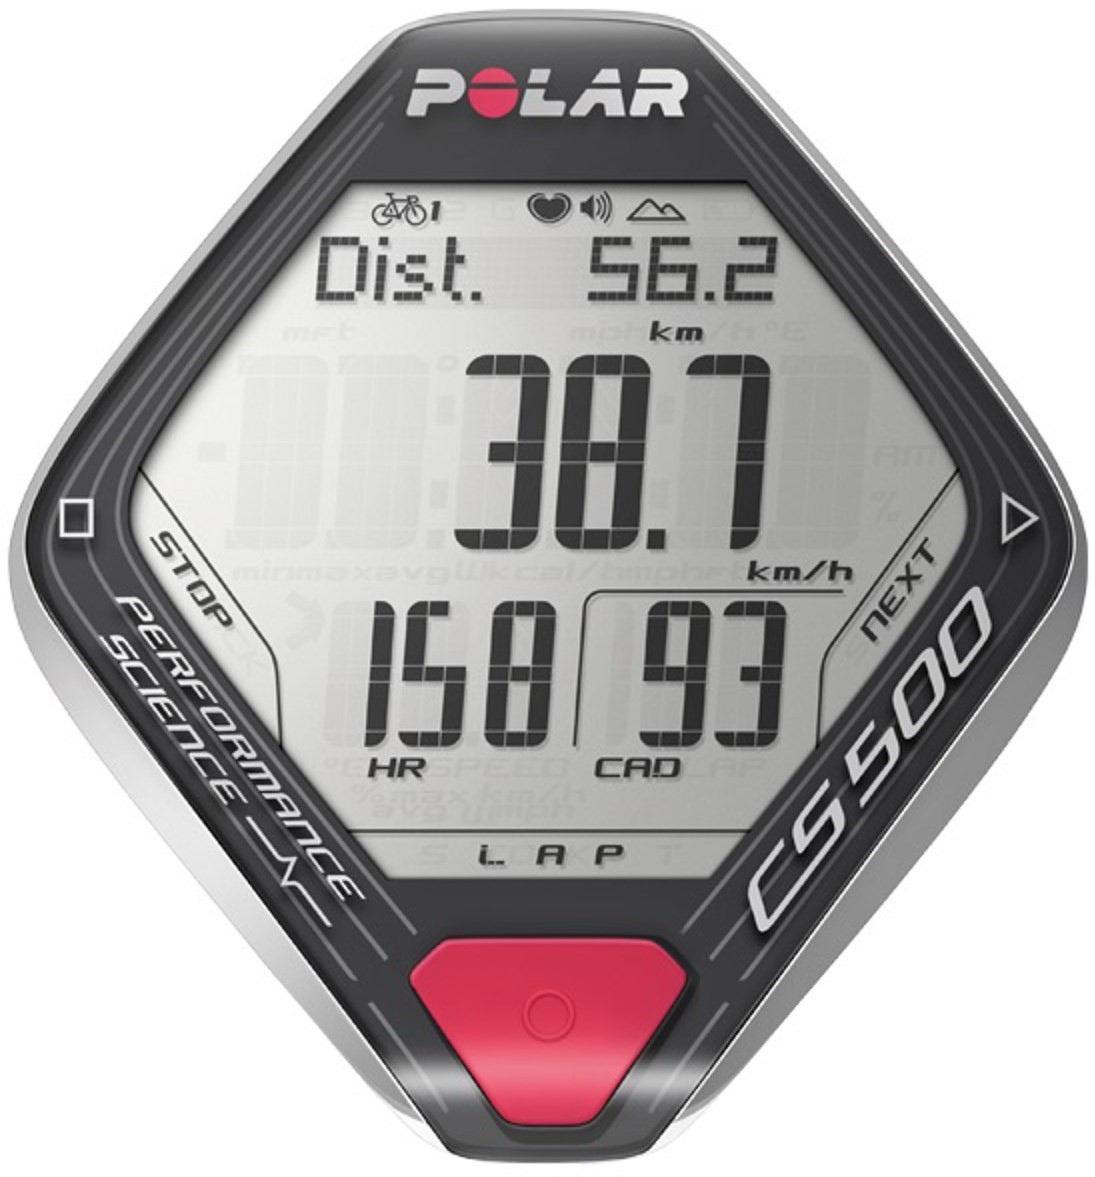 Polar CS500+ Cad Heart Rate Monitor Cycling Computer product image